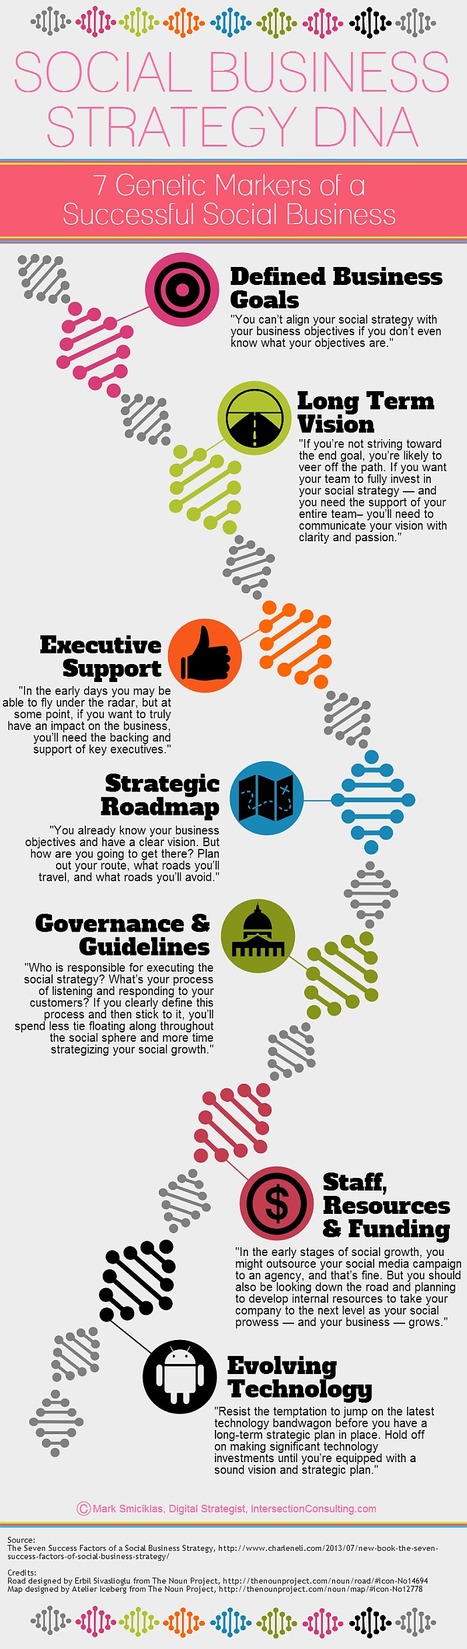 Social Business Strategy DNA [Infographic] - Social Media Explorer | #TheMarketingAutomationAlert | e-commerce & social media | Scoop.it